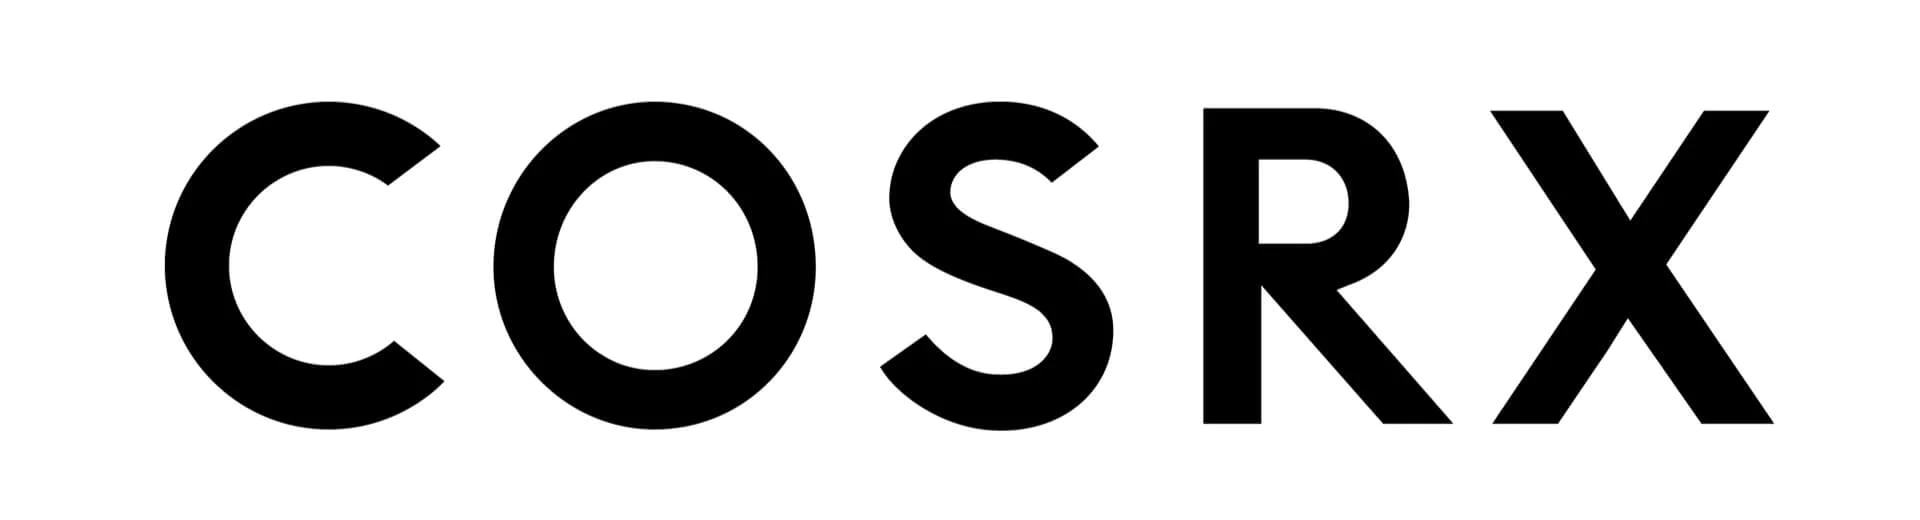 Cosrx Brand Logo